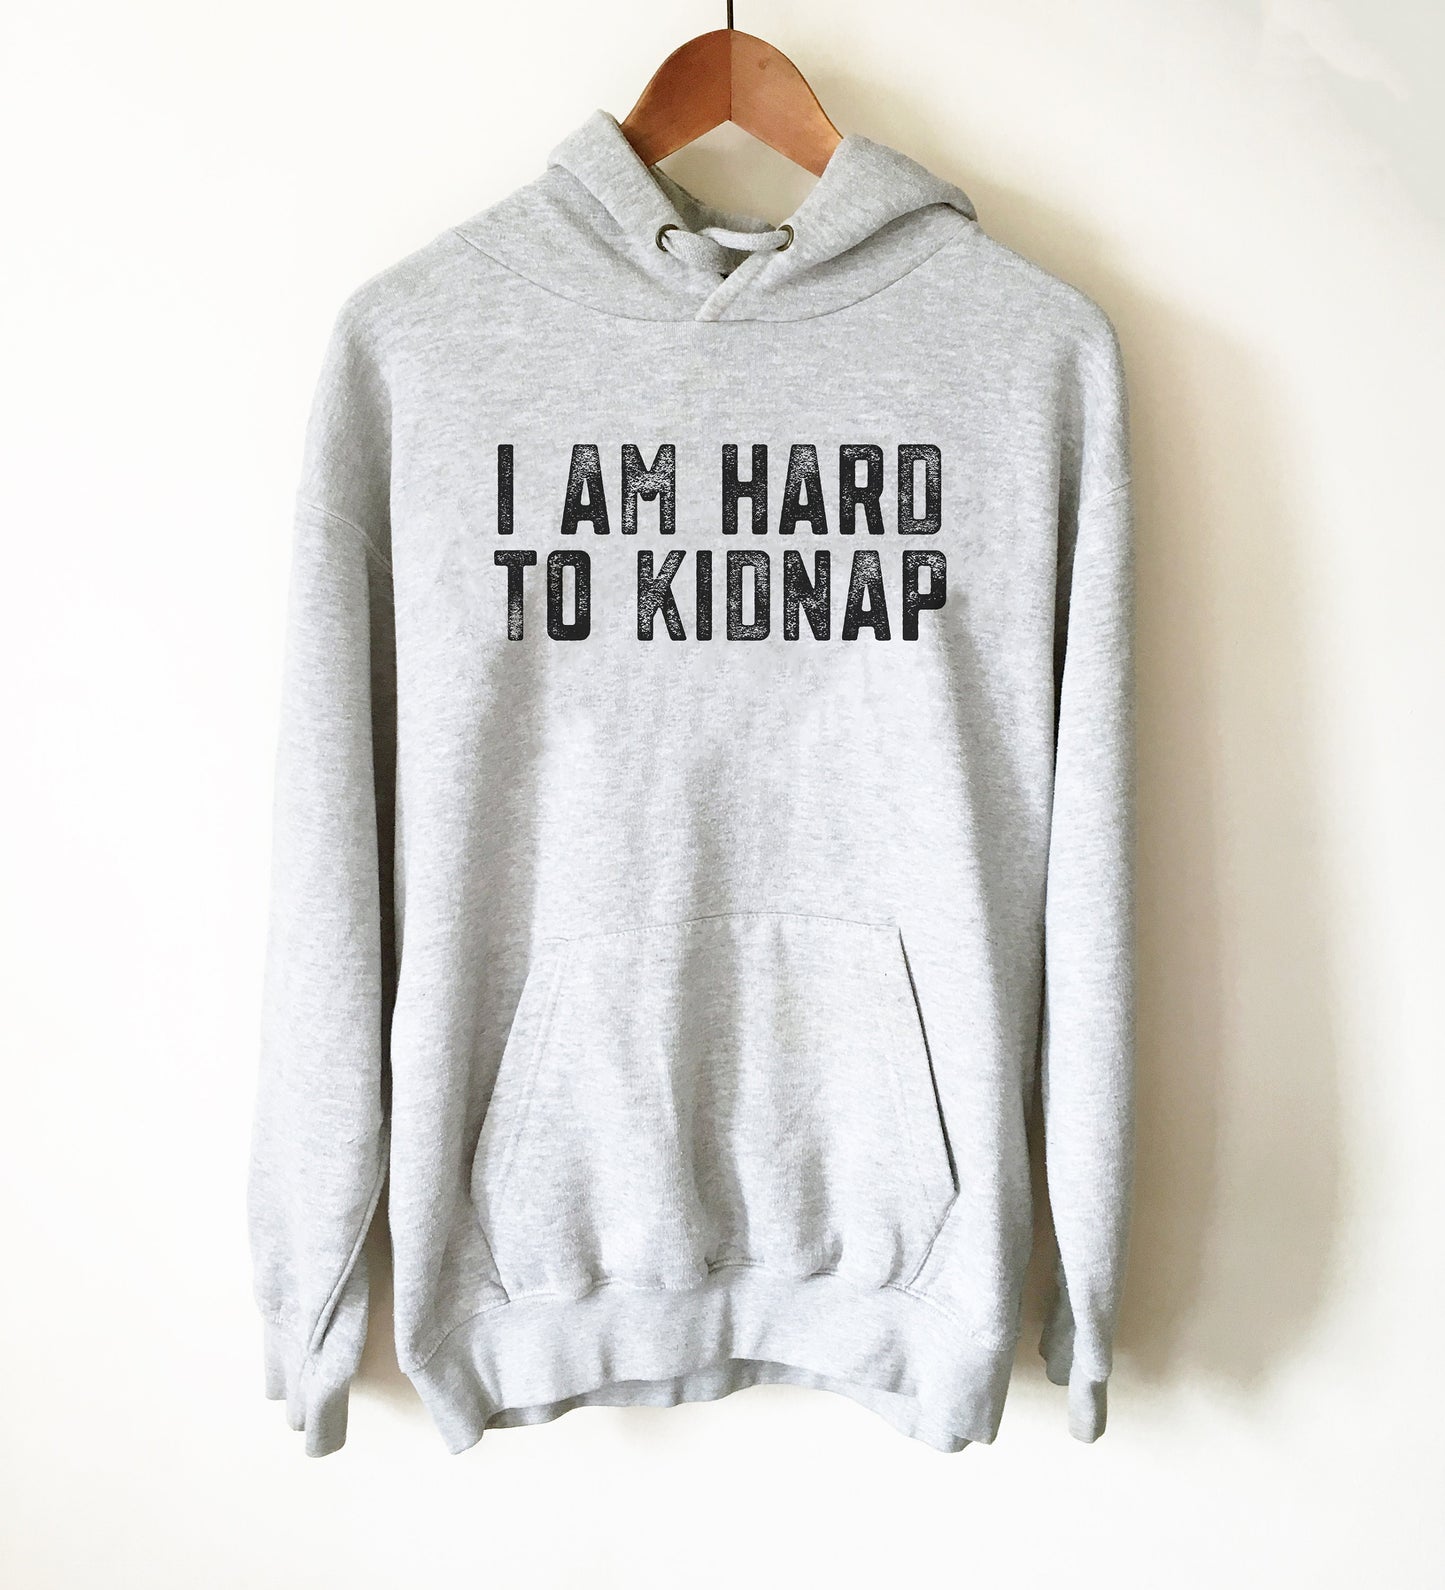 I Am Hard To Kidnap Hoodie - Gun Shirt, Karate Shirt, Karate Gift, Martial Arts, Judo, Jiu Jitsu, Kung Fu, Boxing Shirt, Wrestling Shirt